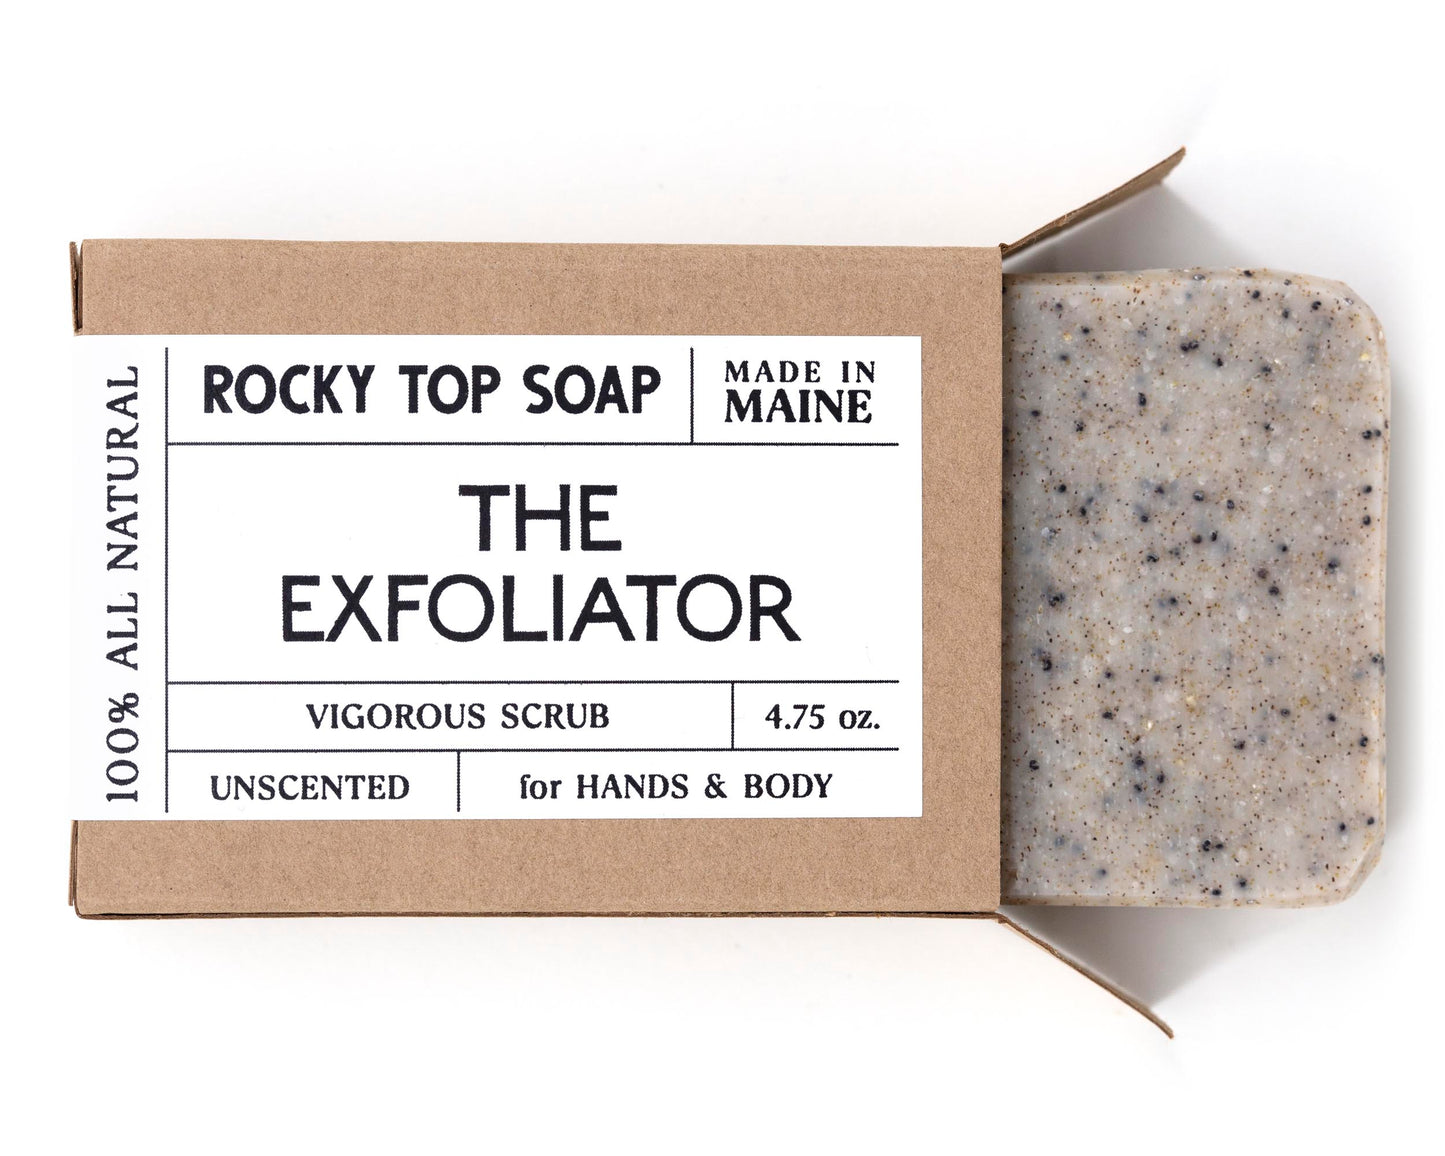 Exfoliating Soap Set